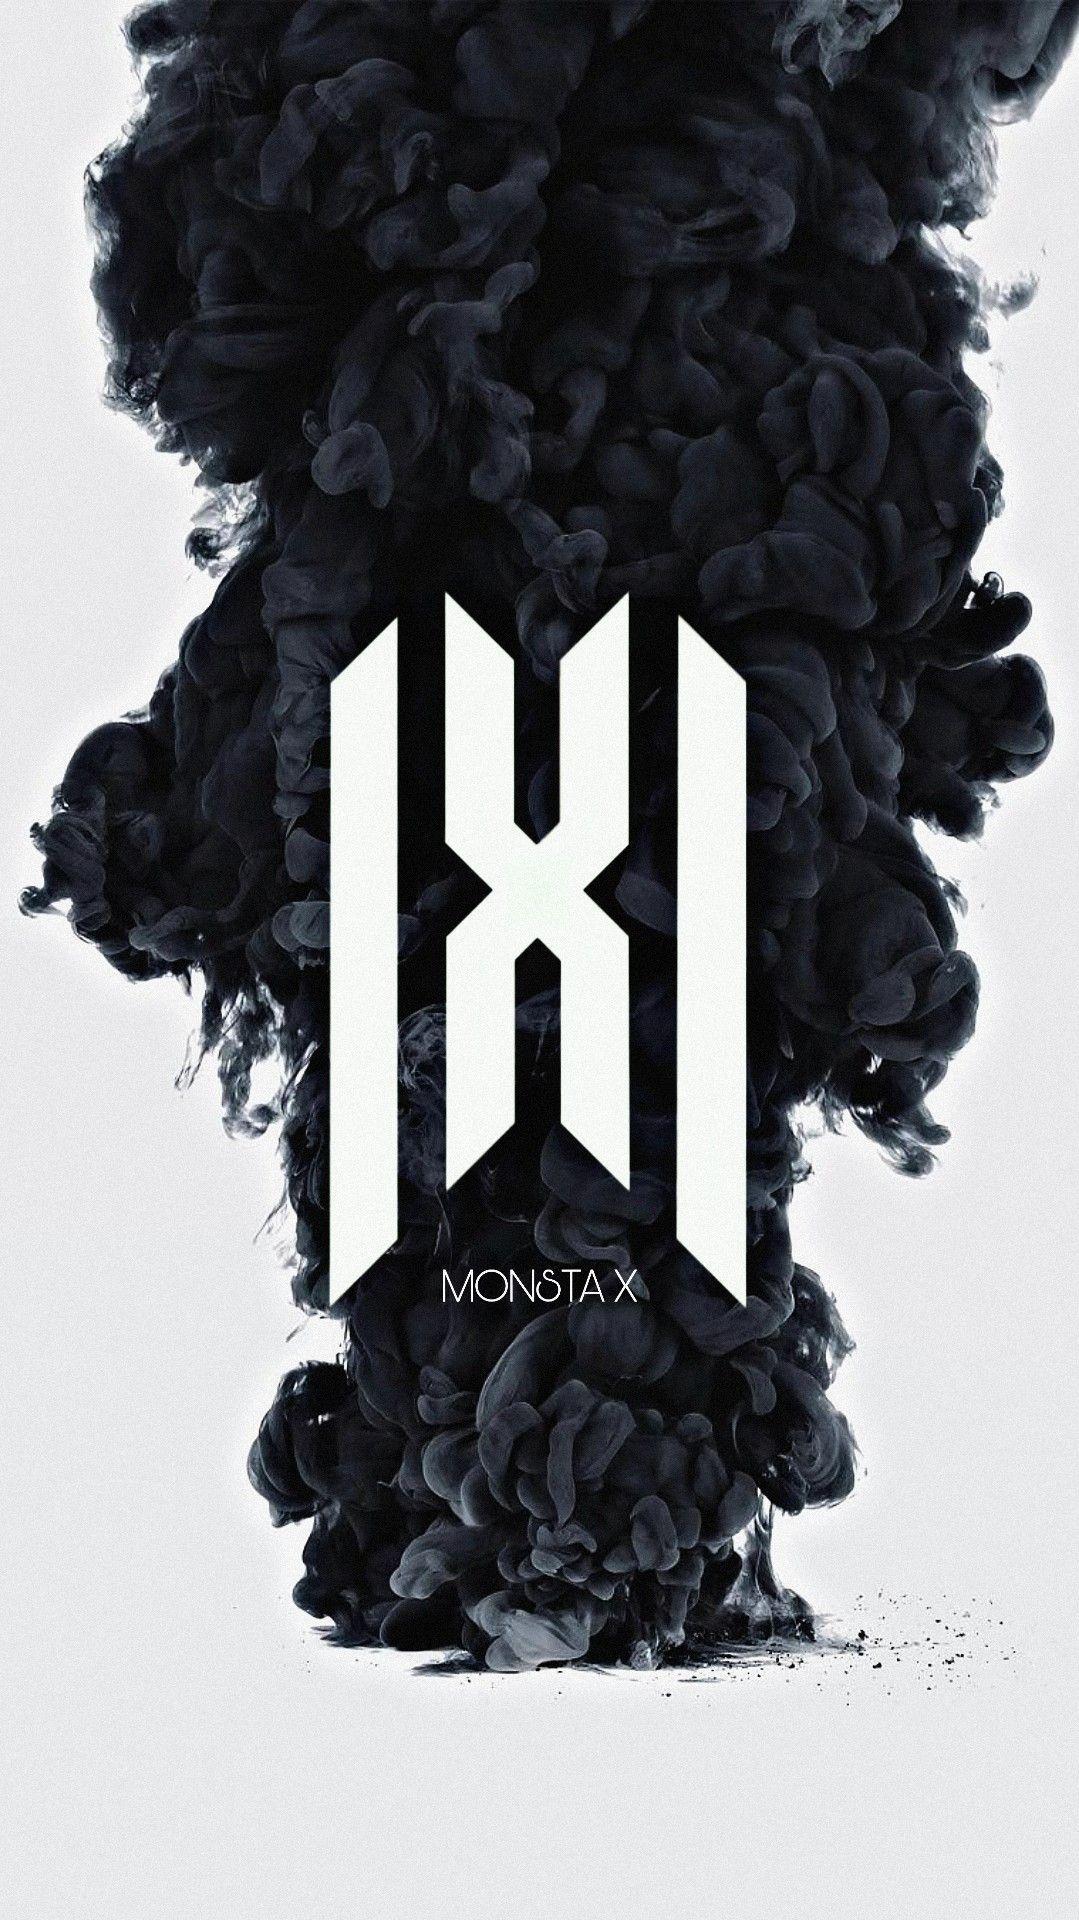 Monsta X Logo Wallpapers Top Free Monsta X Logo Backgrounds Wallpaperaccess